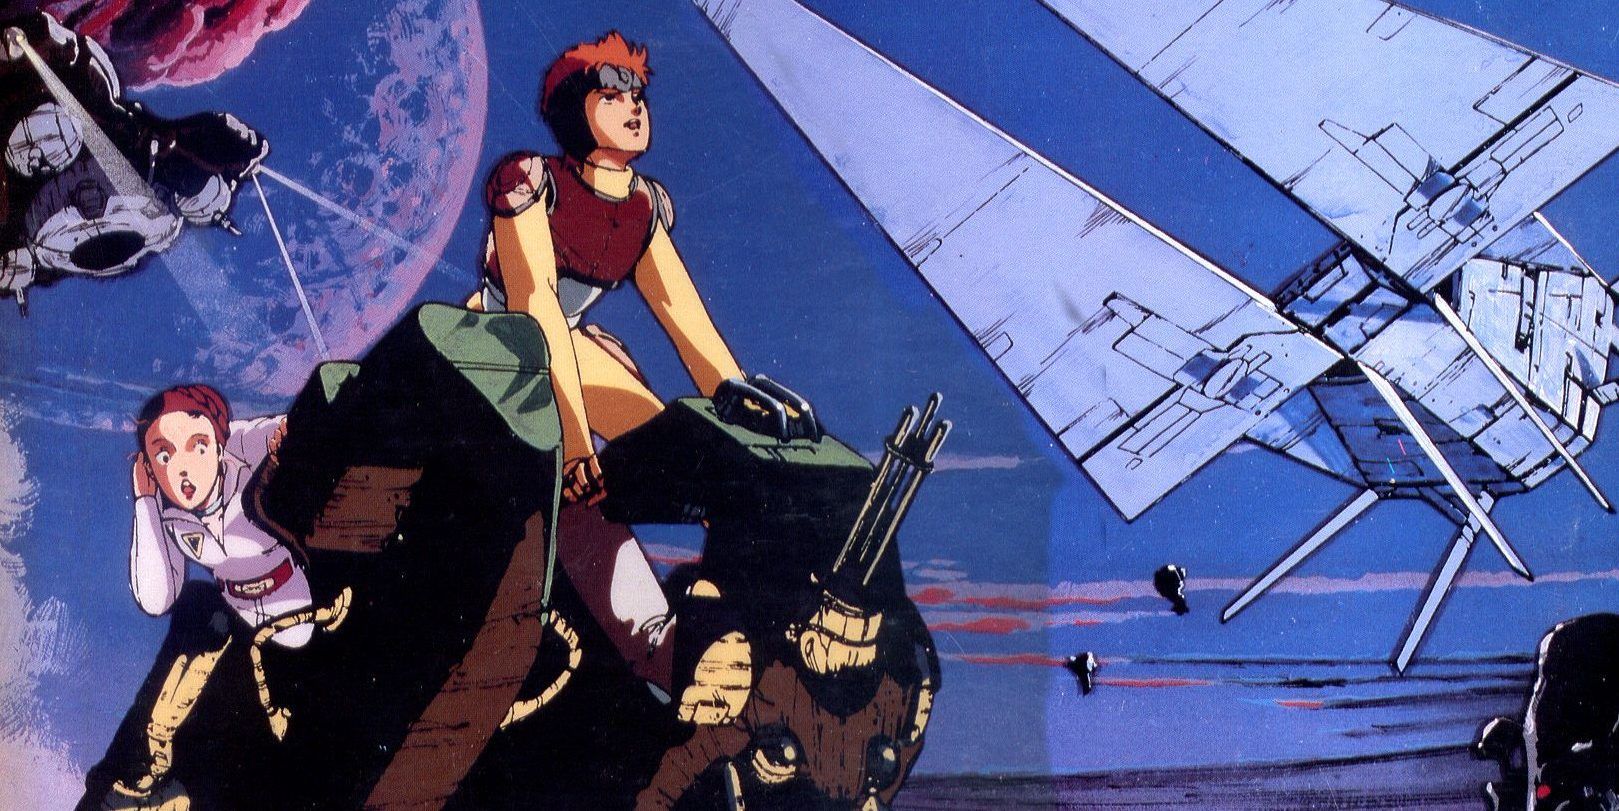 LENSMAN VHS VIDEO Tape 1994 Children's Space Adventure Animation - Tracked  $29.00 - PicClick AU